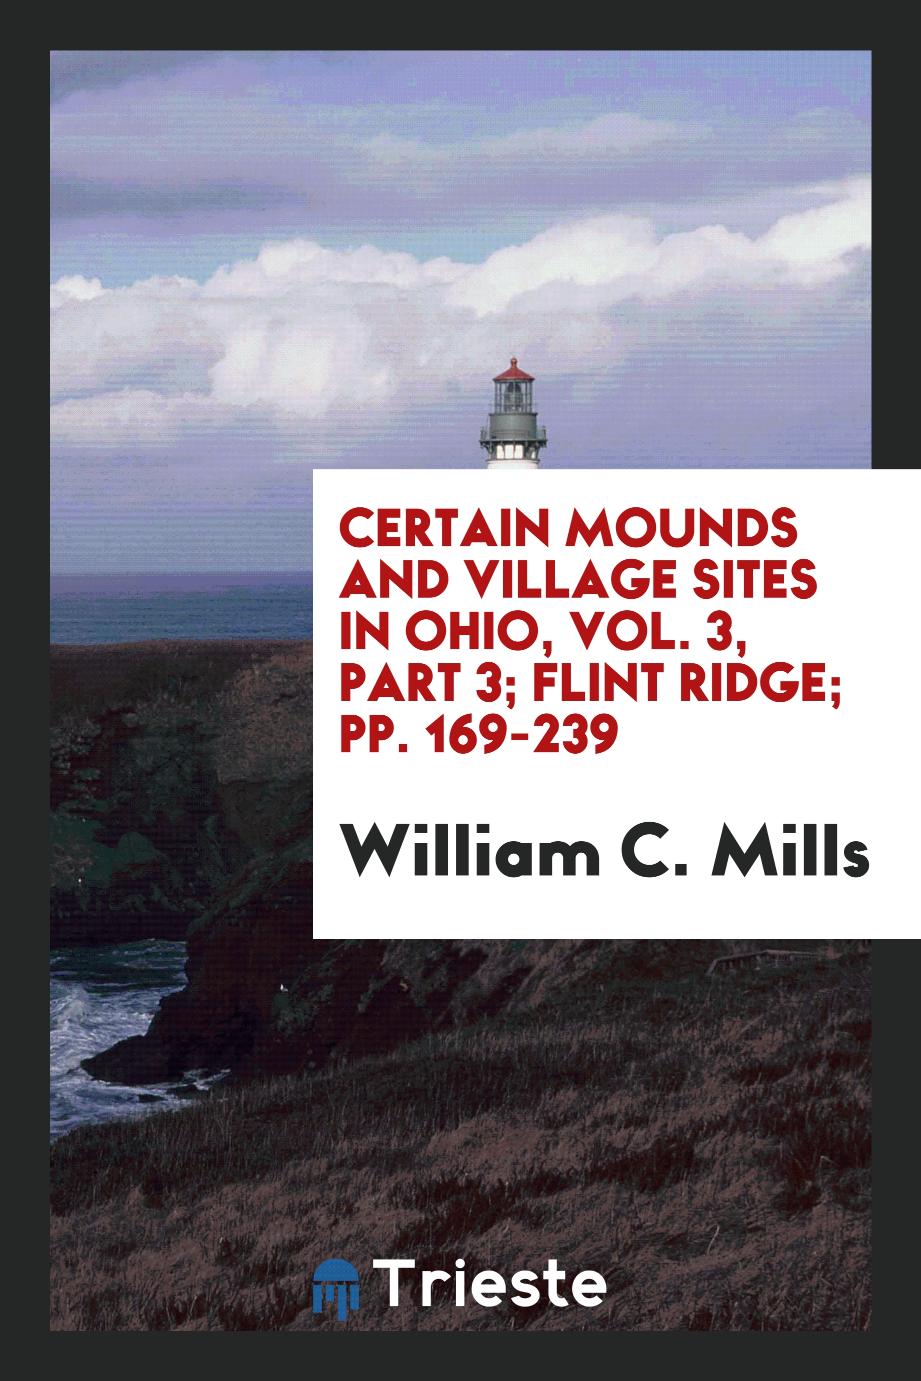 Certain Mounds and Village Sites in Ohio, Vol. 3, Part 3; Flint ridge; pp. 169-239